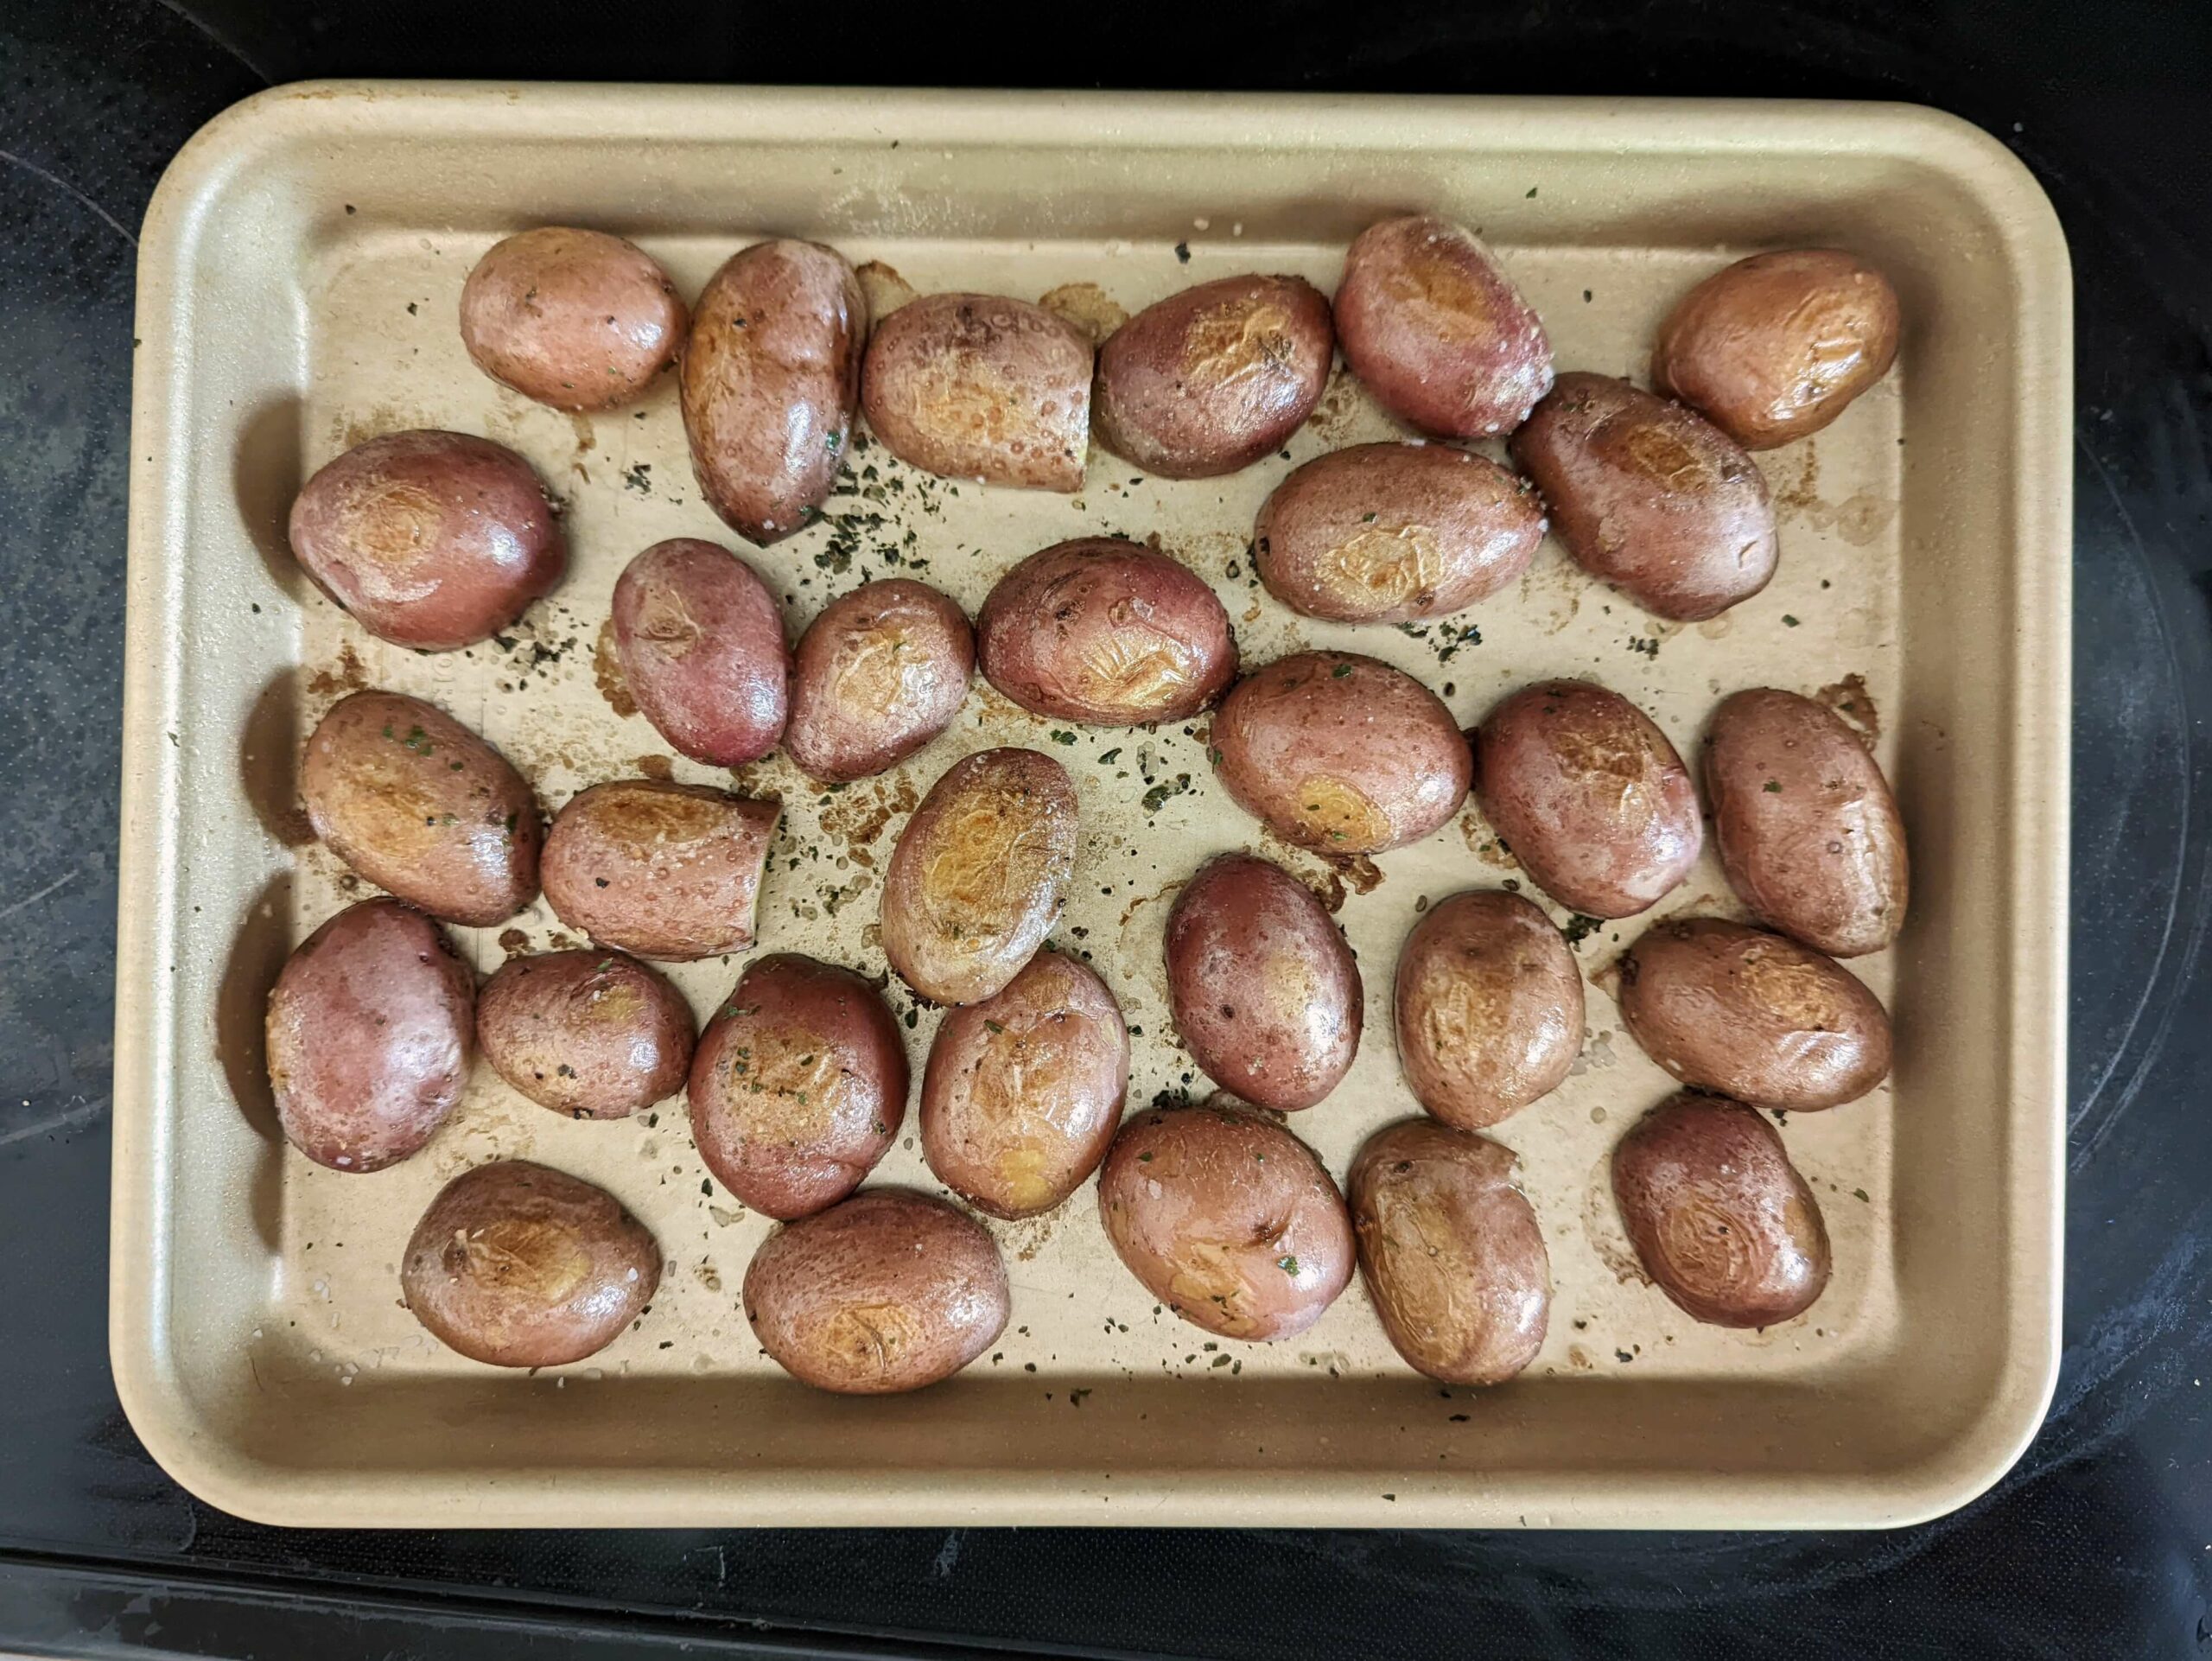 Yukon gold potatoes on a rimmed baking sheet.